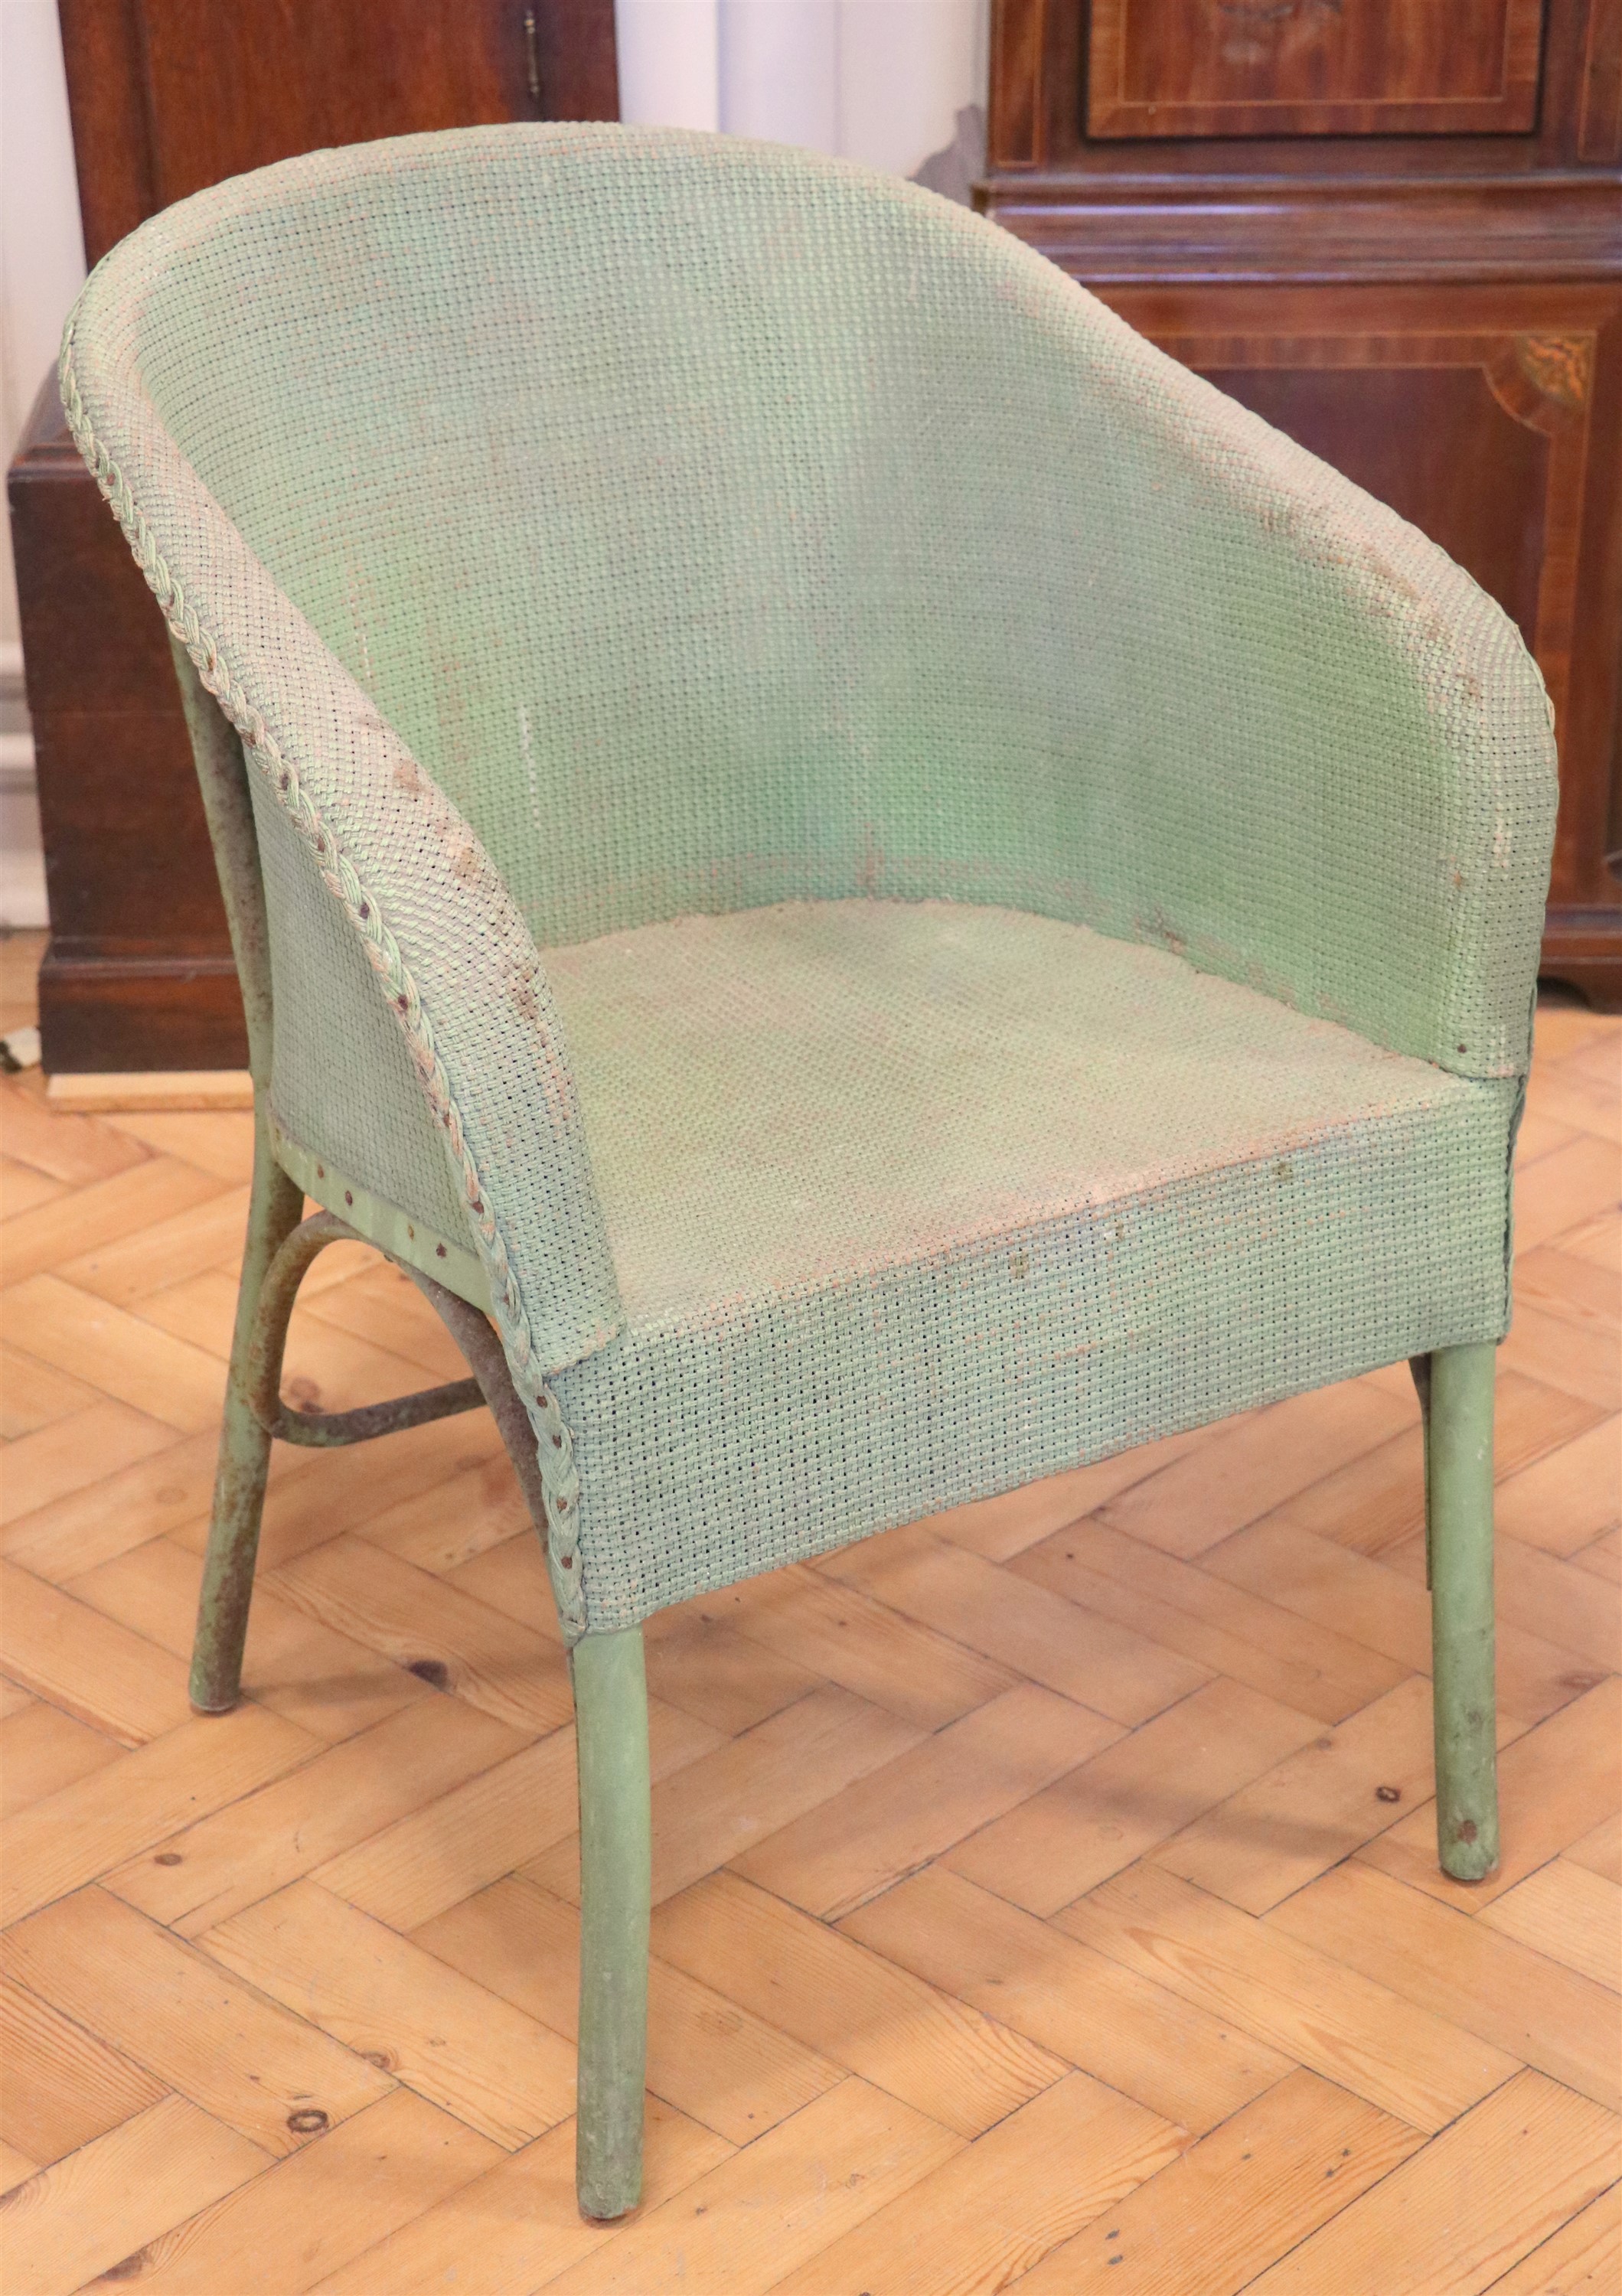 A Sirrom or similar armchair, circa 1930s